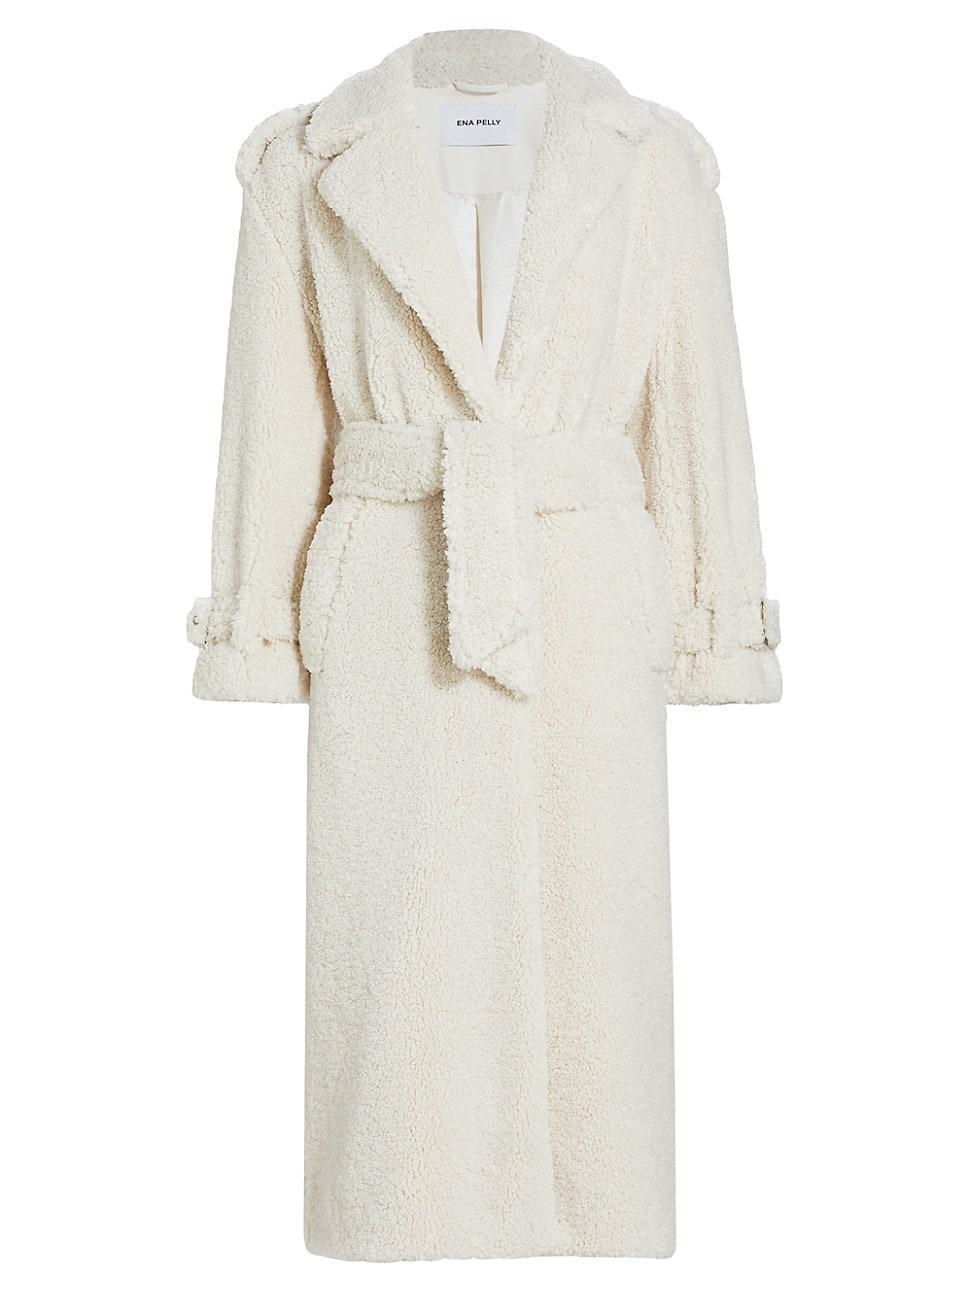 Ena Pelly Harri Oversized Teddy Coat in Bone - Cream. Size 10/M (also in 6/XS, 8/S). Product Image